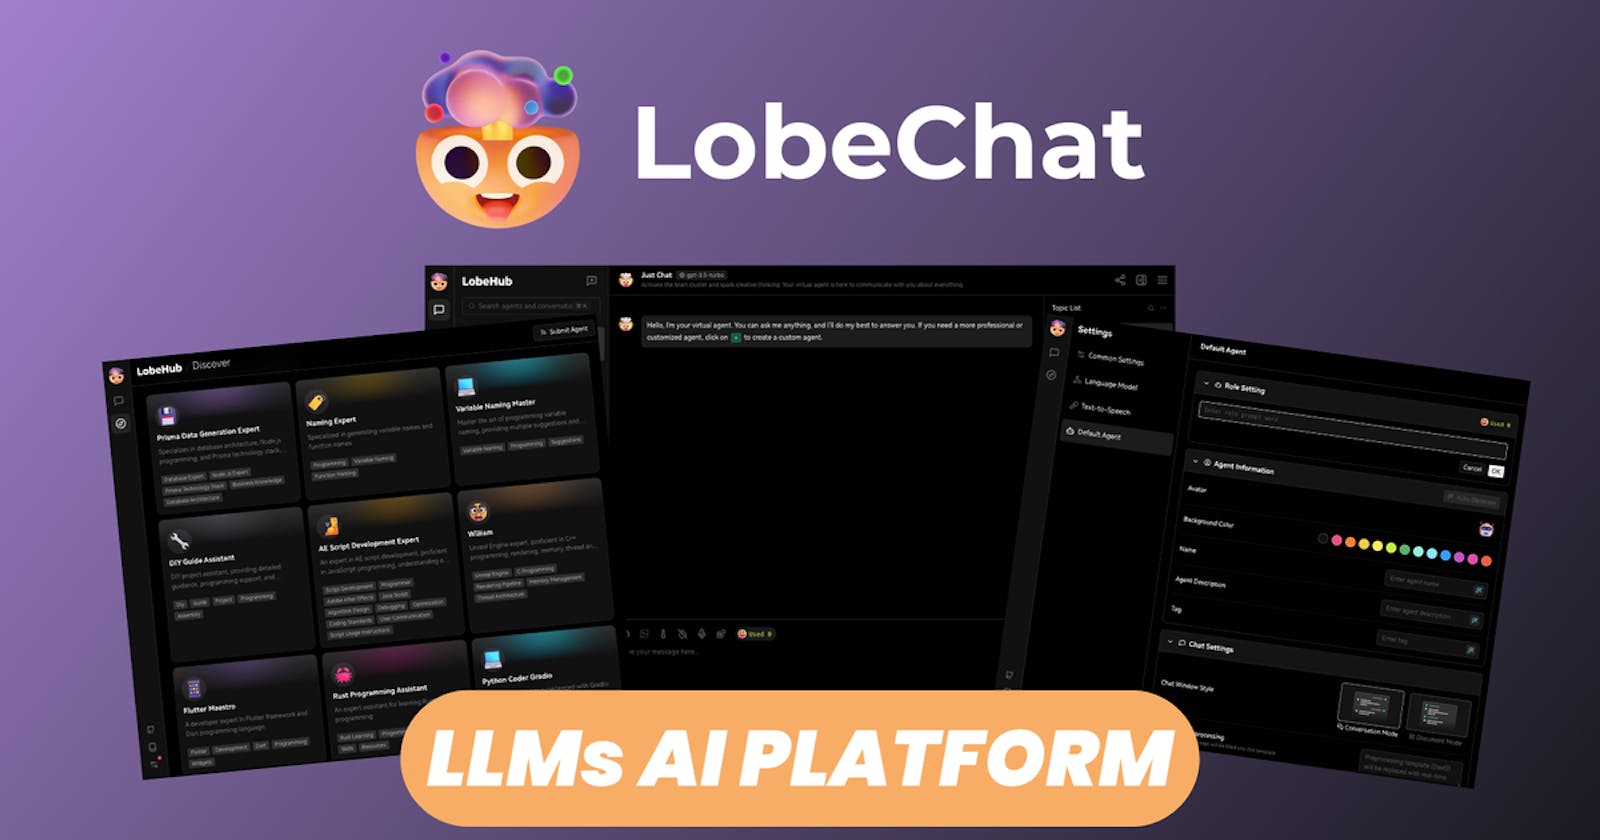 LobeChat: Free Open Source LLM Platform